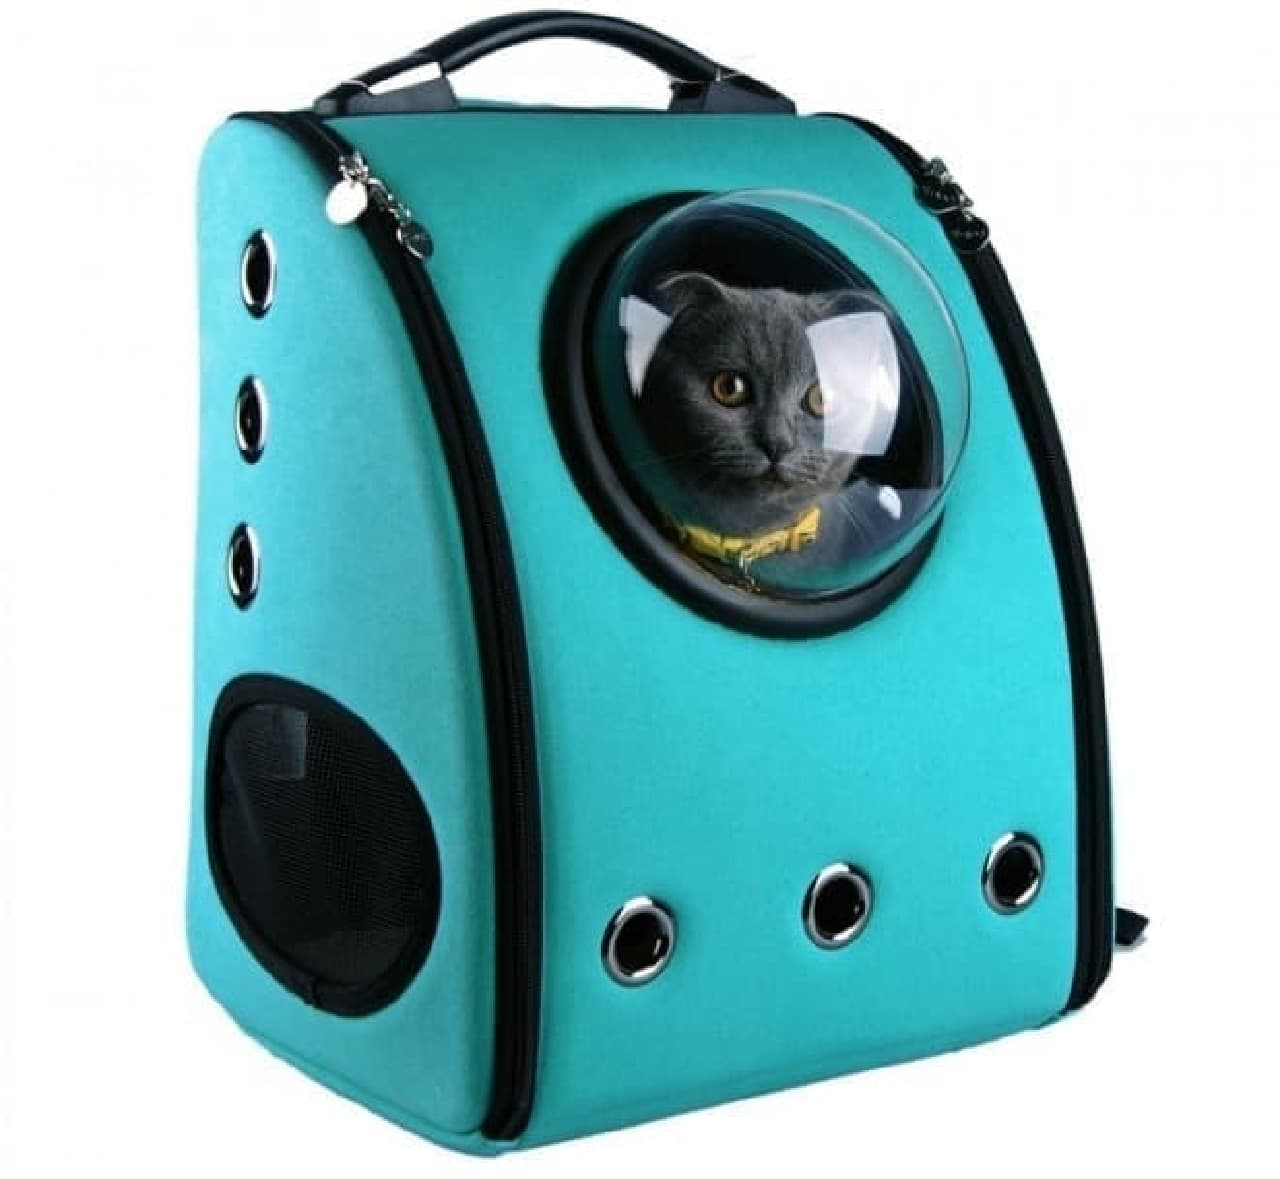 Pet carry U-pet with window "Anima school bag" "Anima backpack", now on sale in Japan